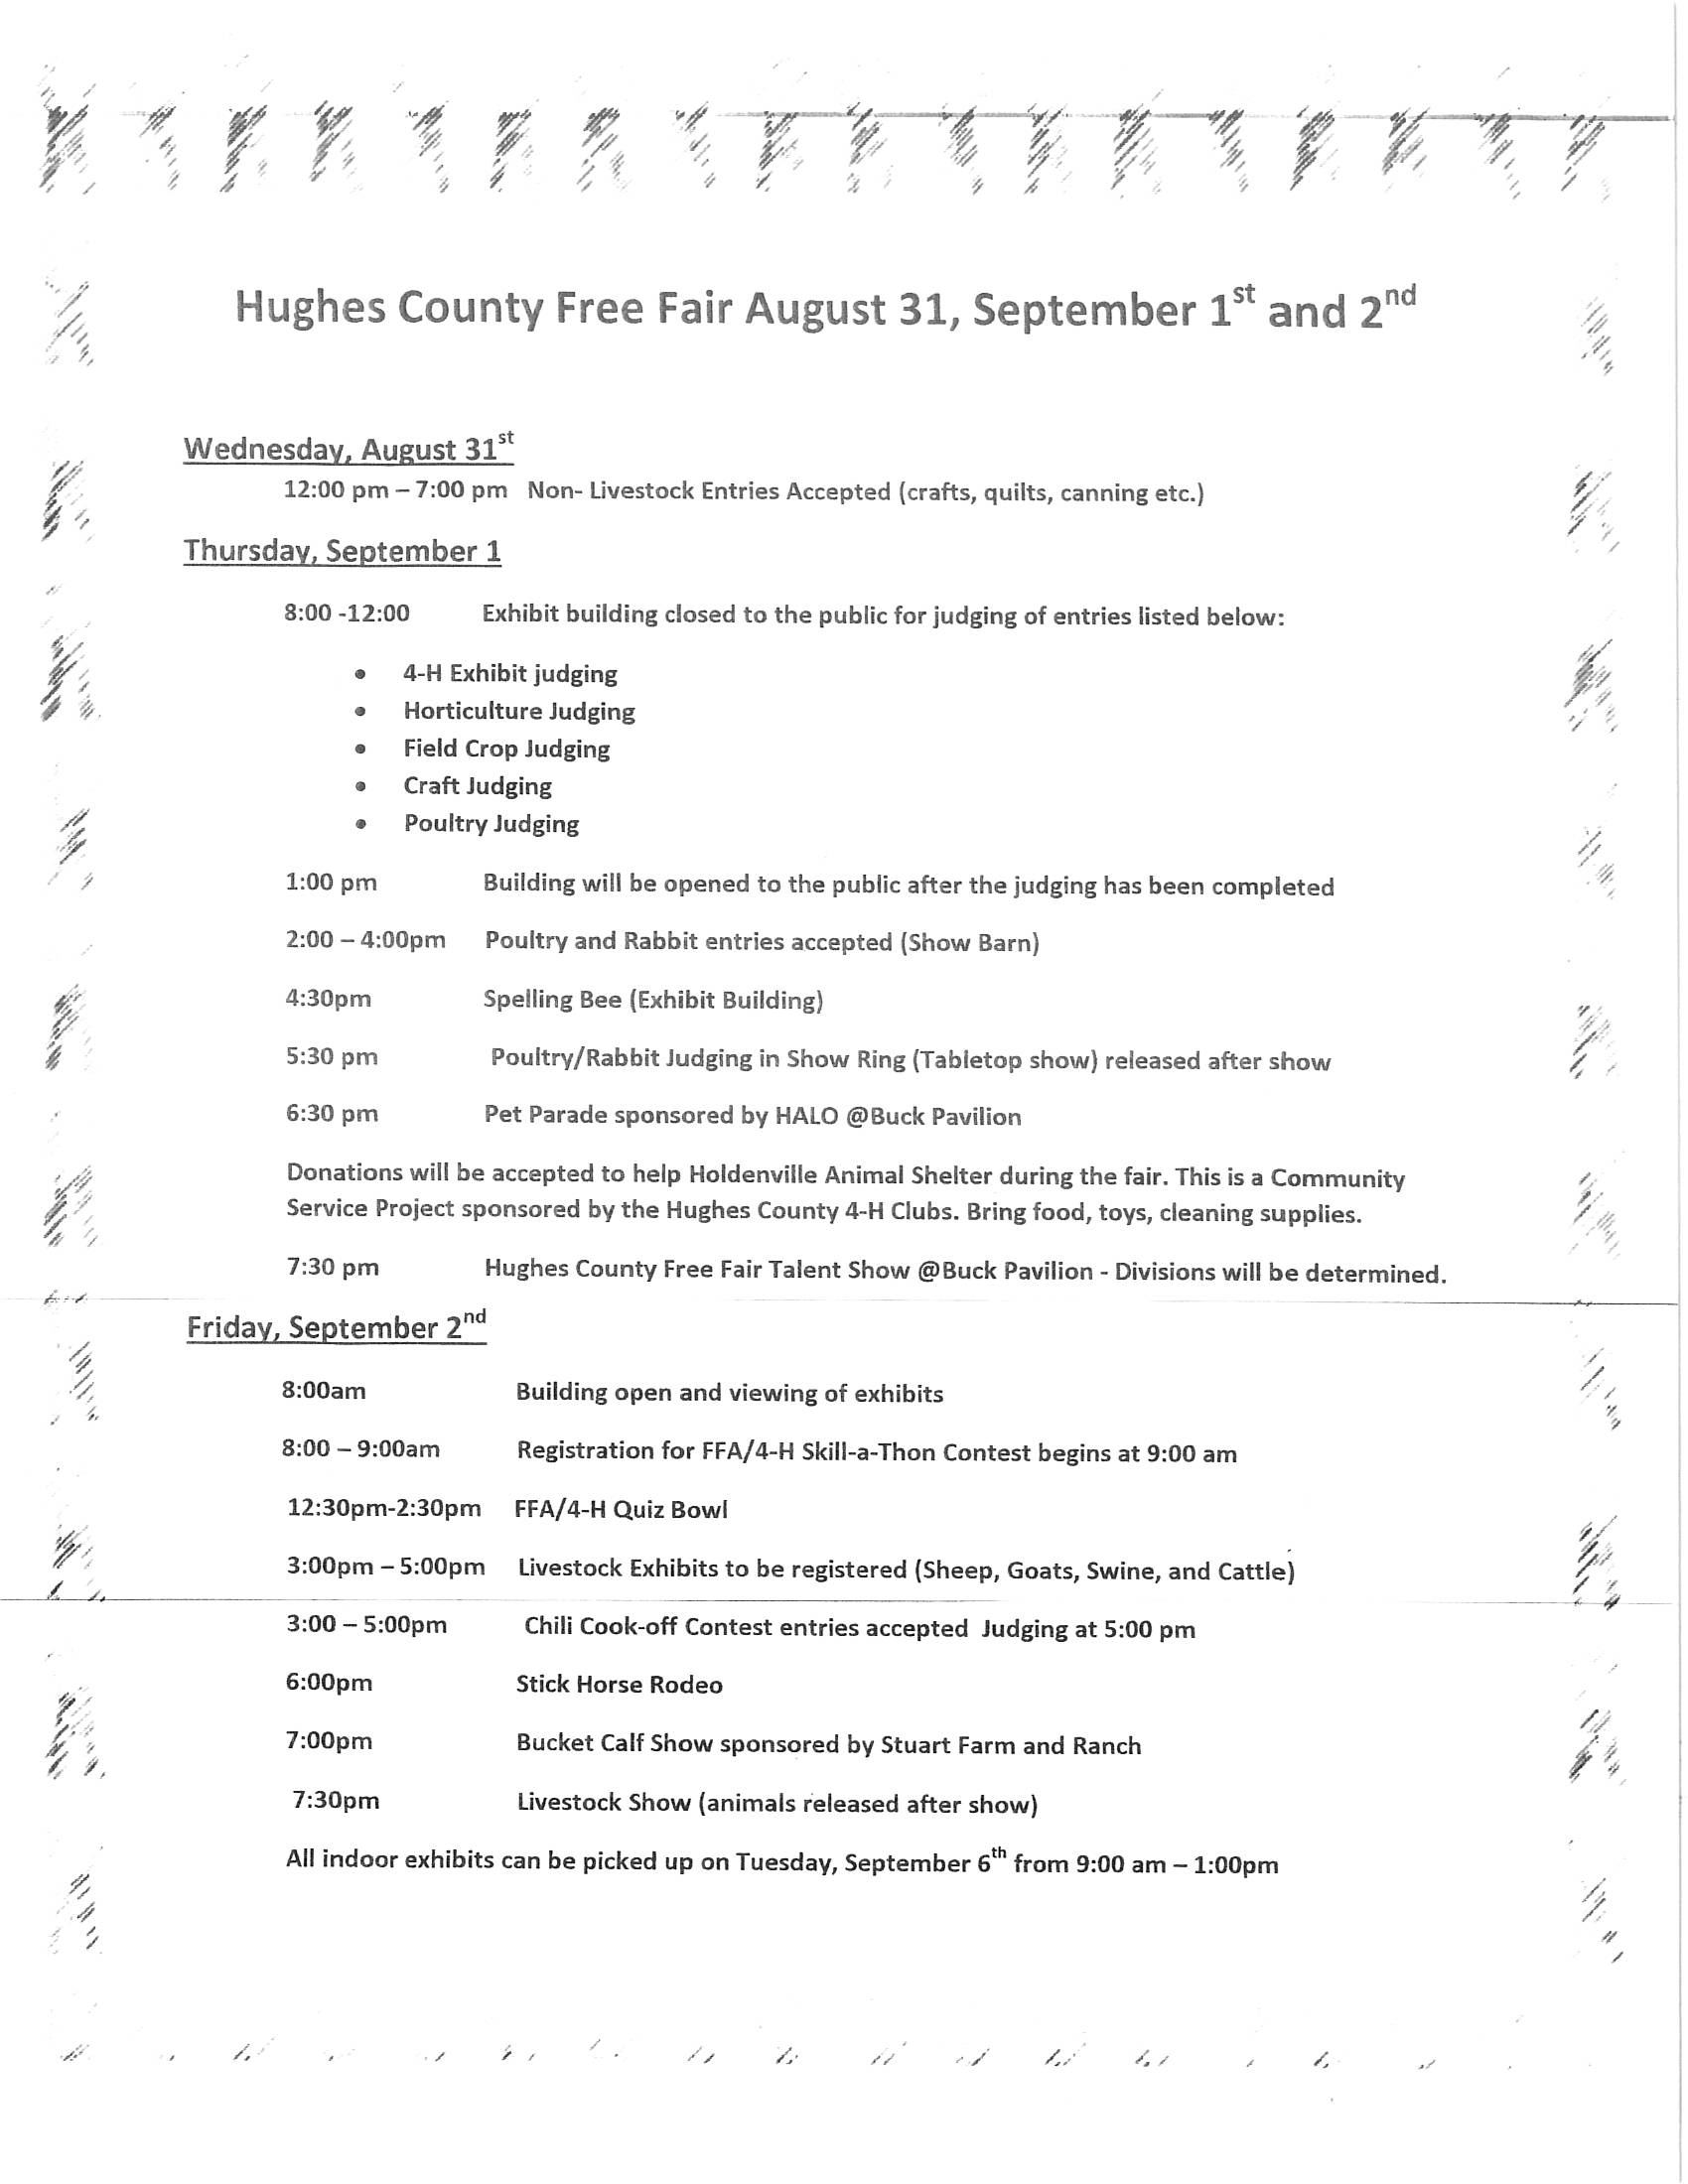 2022 Hughes County Free Fair Agenda